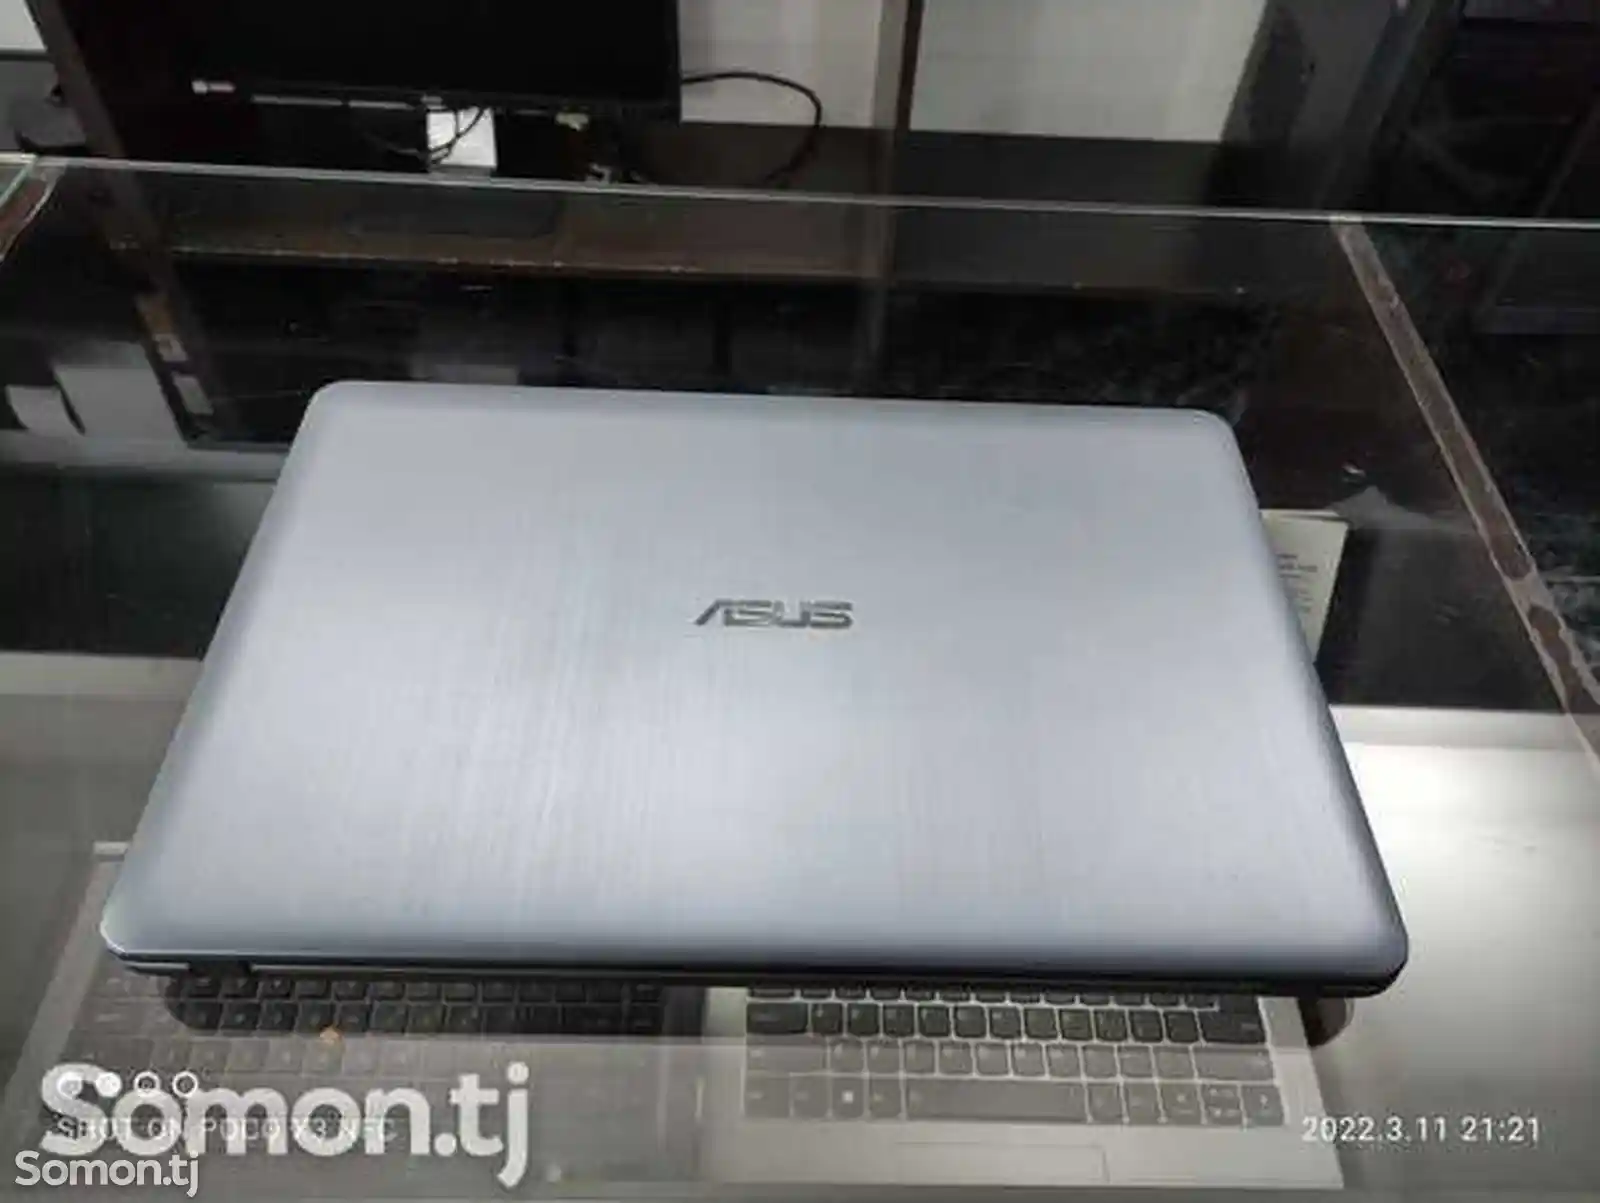 Игровой ноутбук Asus X541UJ i7-7500U DDR4 8GB GEFORCE 920M 2GB-3